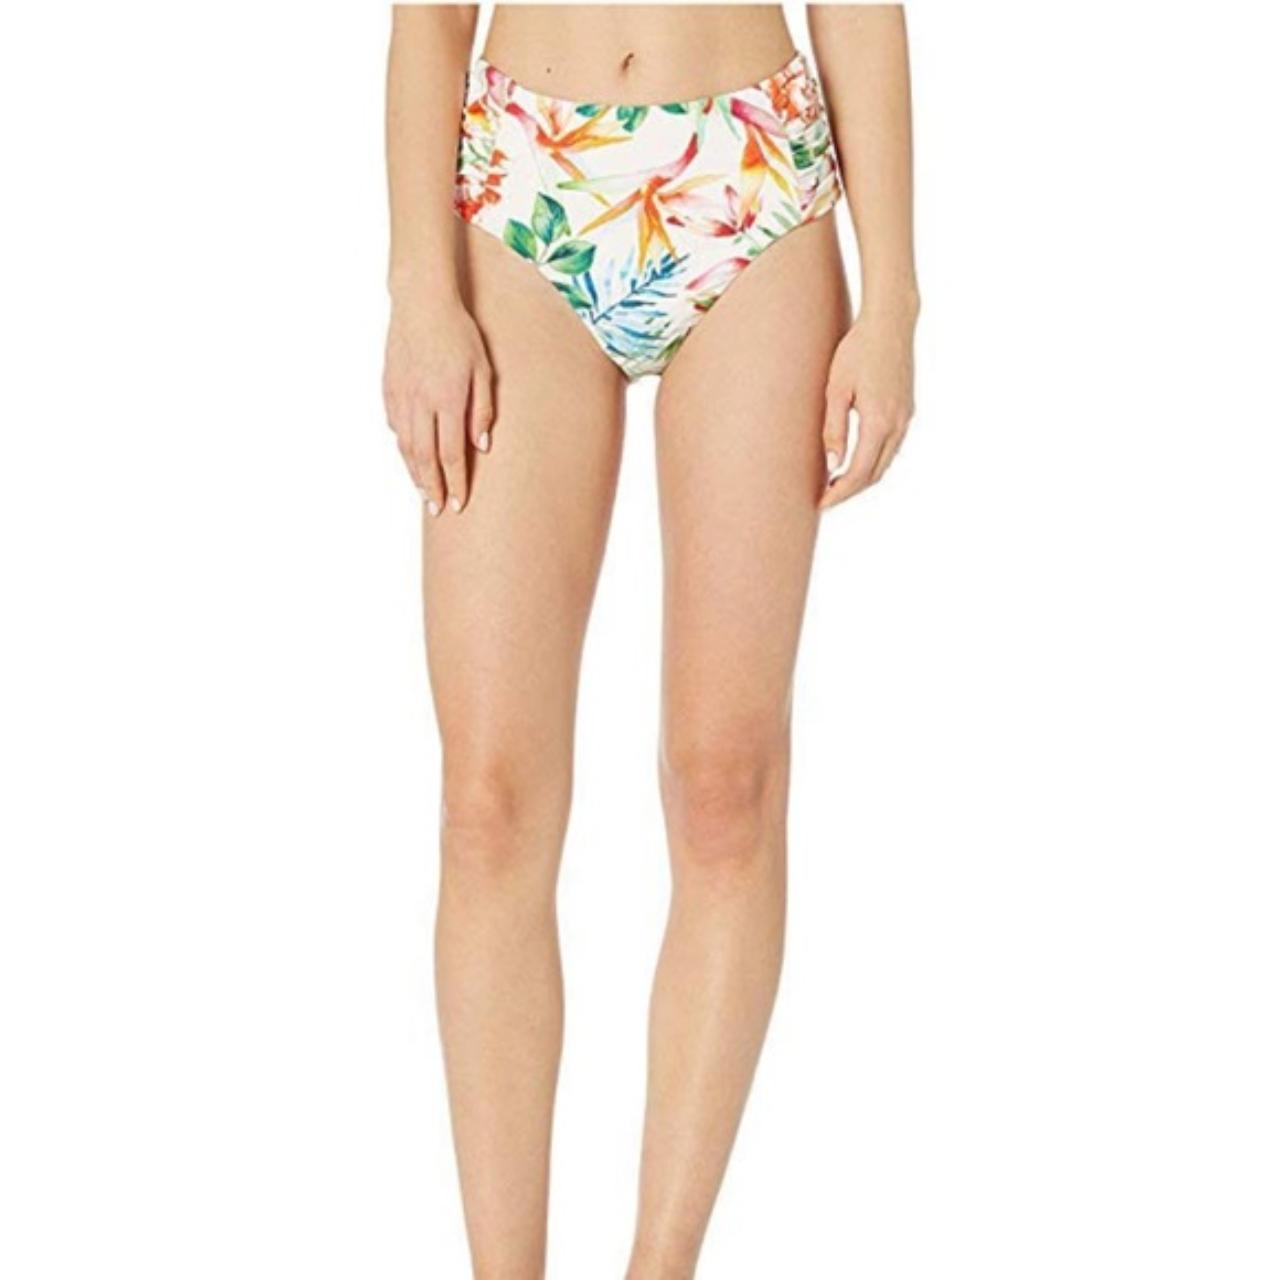 Lucky Brand bathing suit bottom, multicolor - Depop